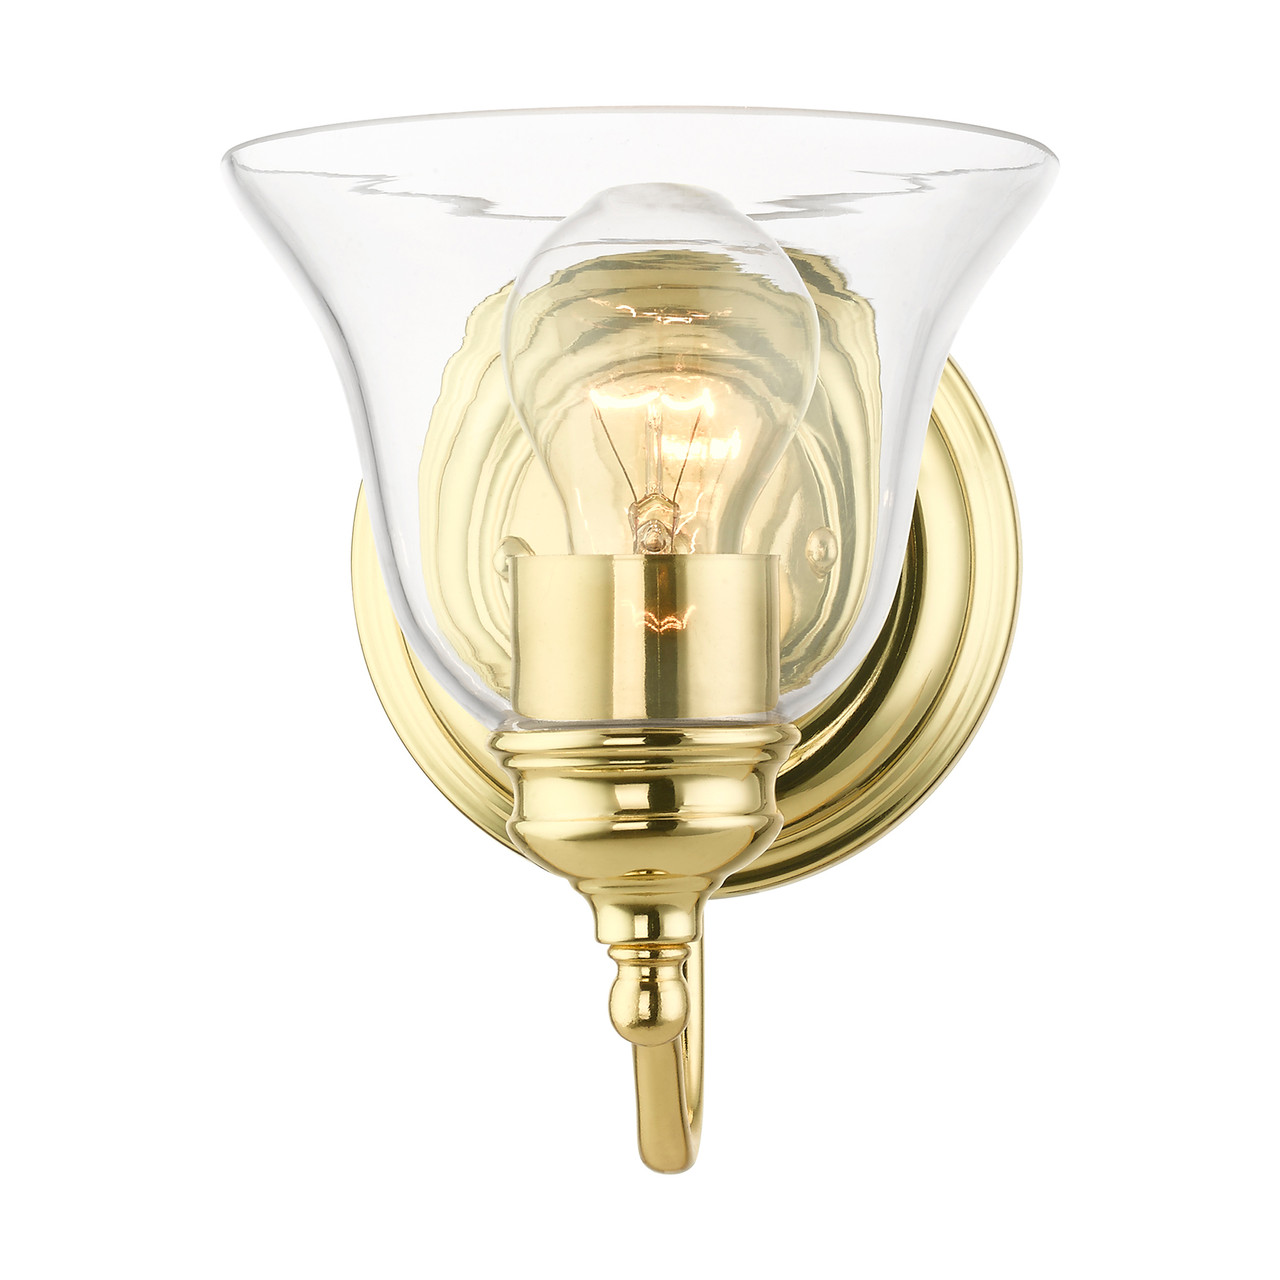 LIVEX LIGHTING 16931-02 1 Light Polished Brass Vanity Sconce